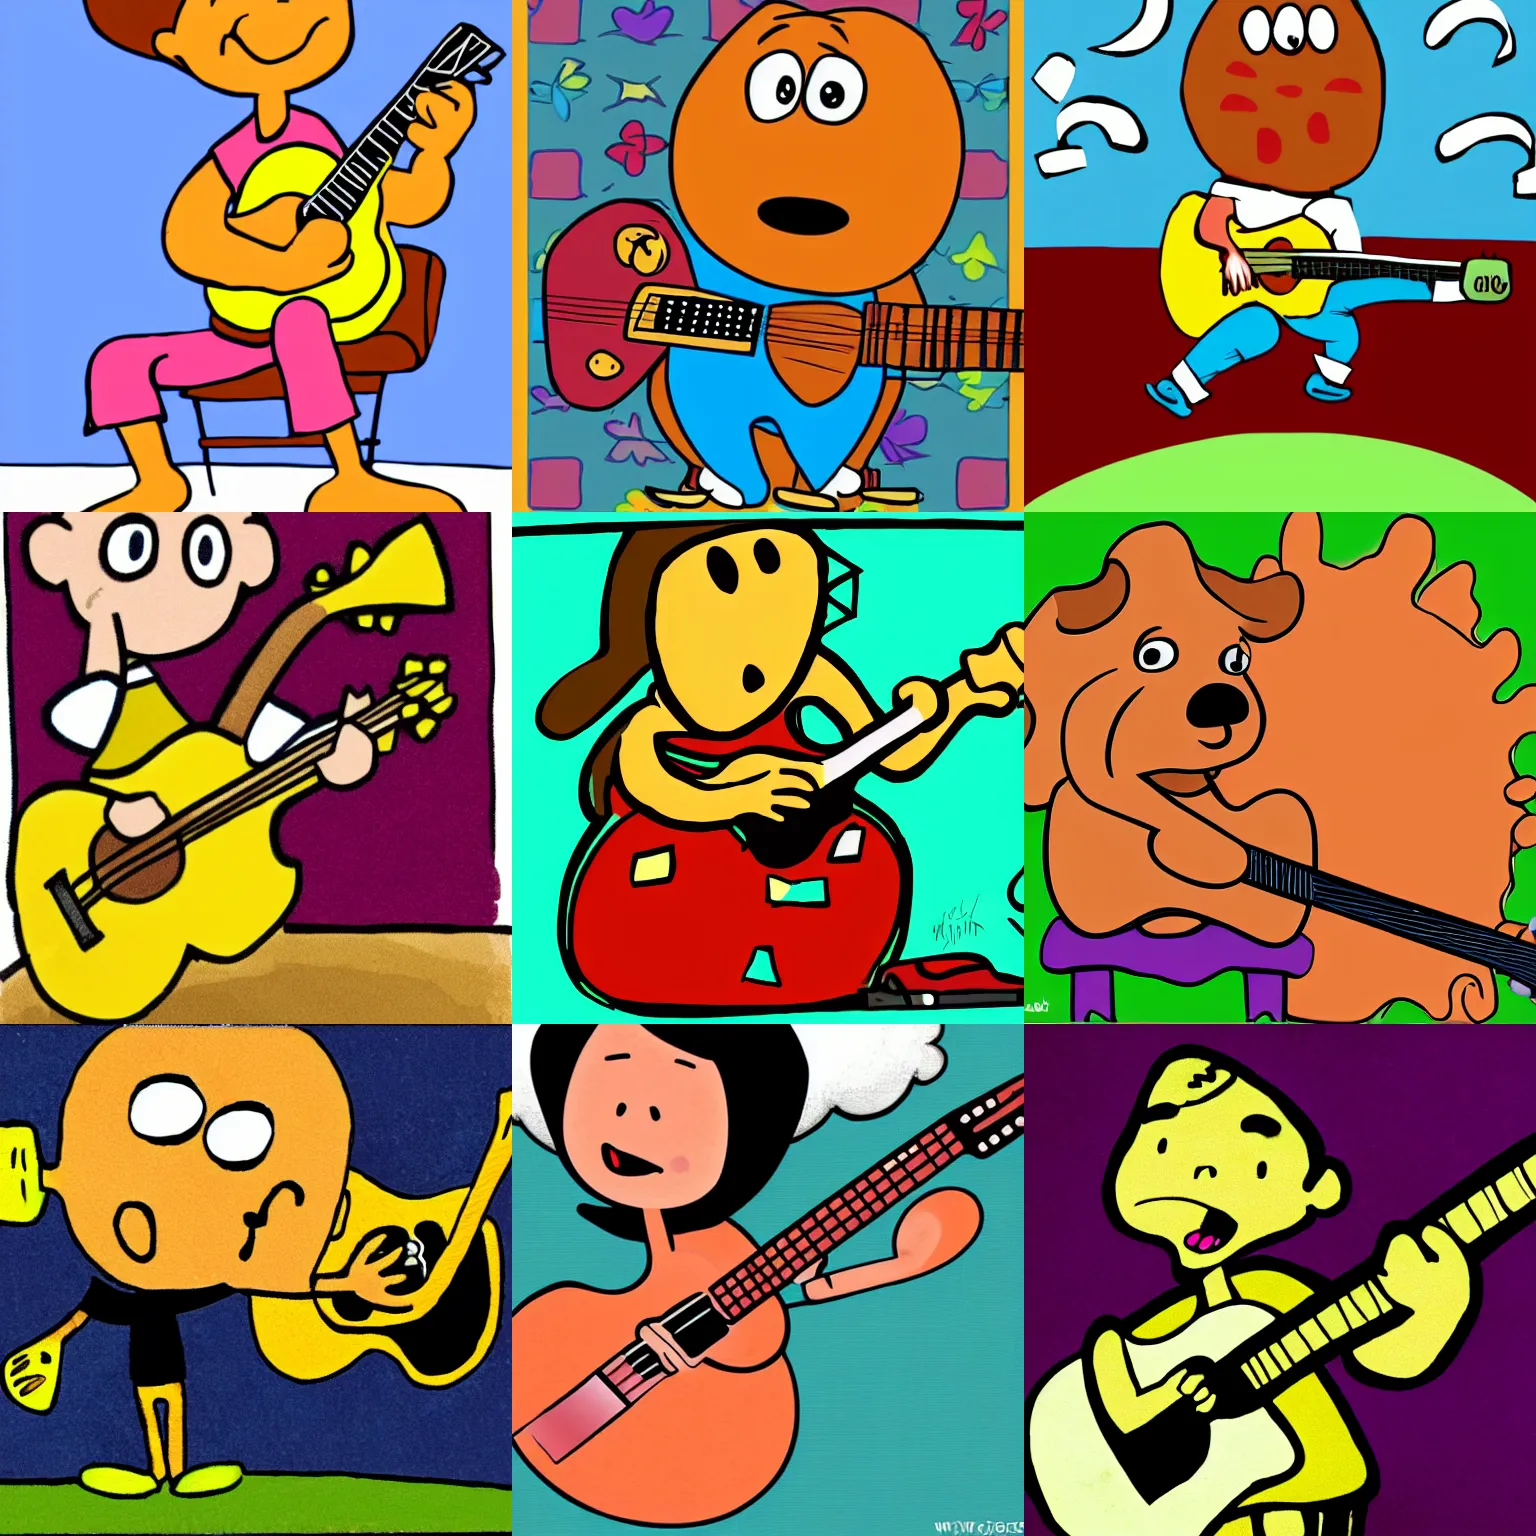 Prompt: peanut playing guitar, cartoon